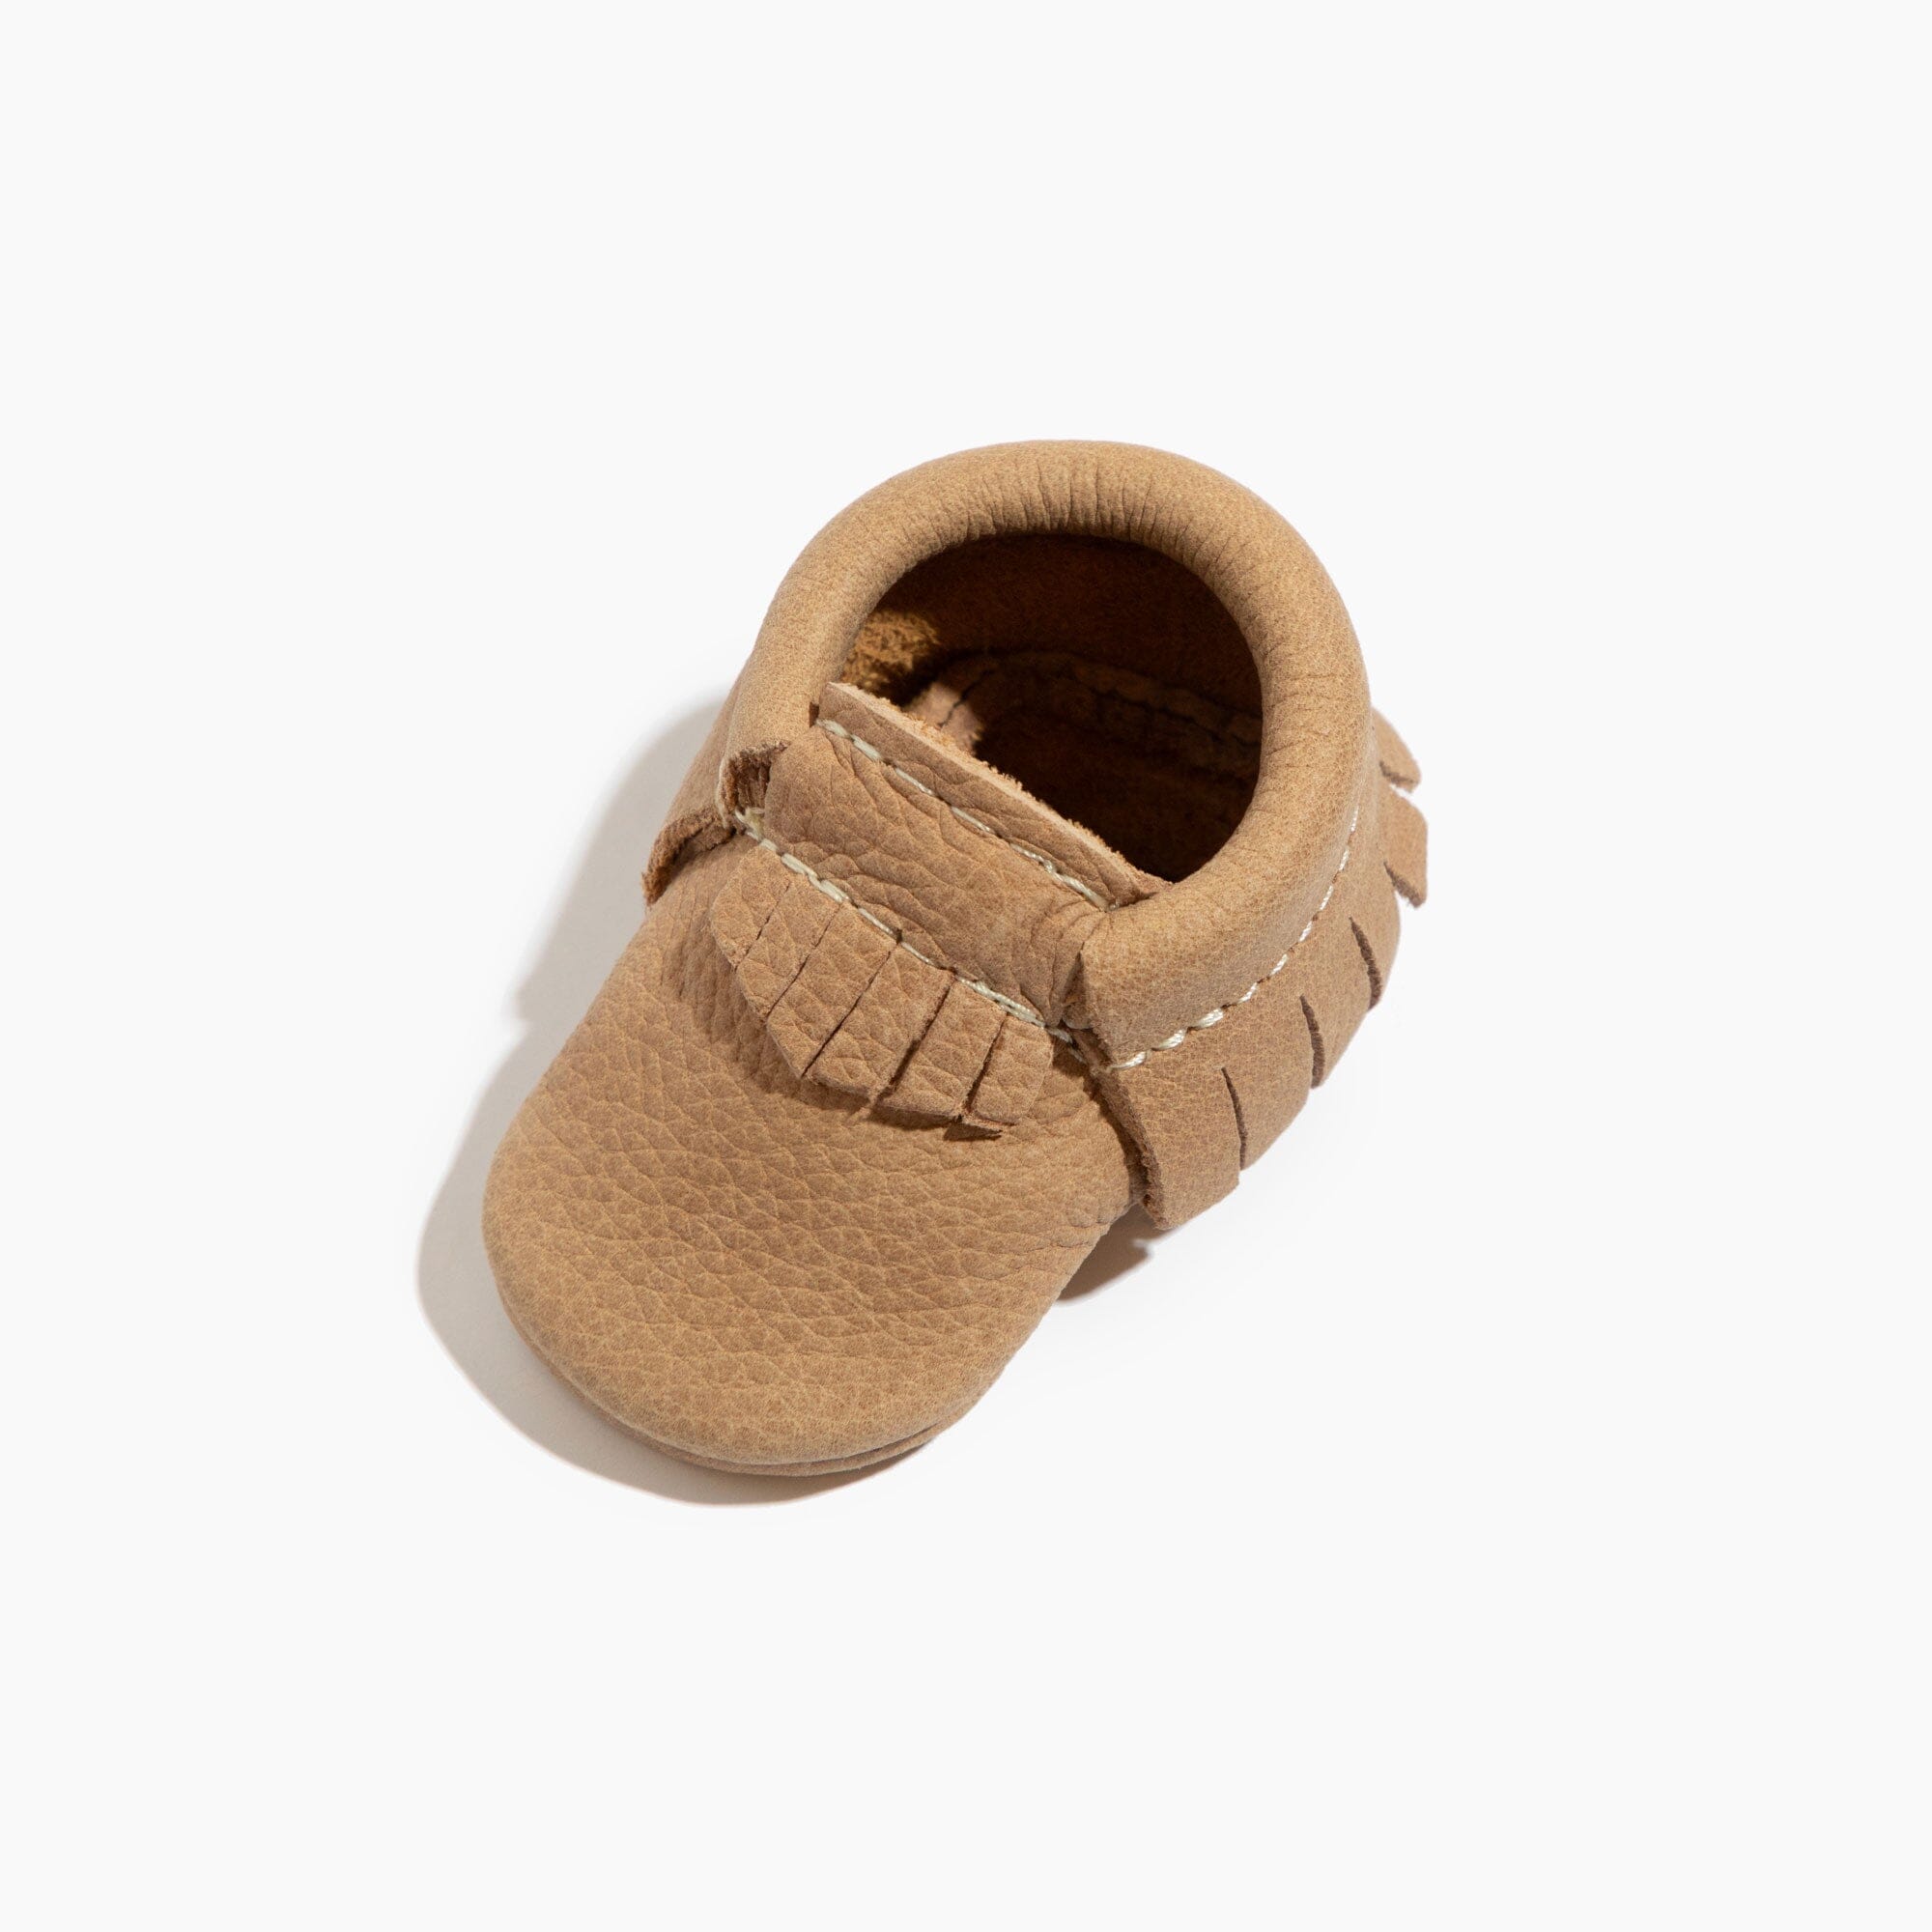 Newborn Weathered Brown Moccasin Baby Shoe Moccasin Newborn 